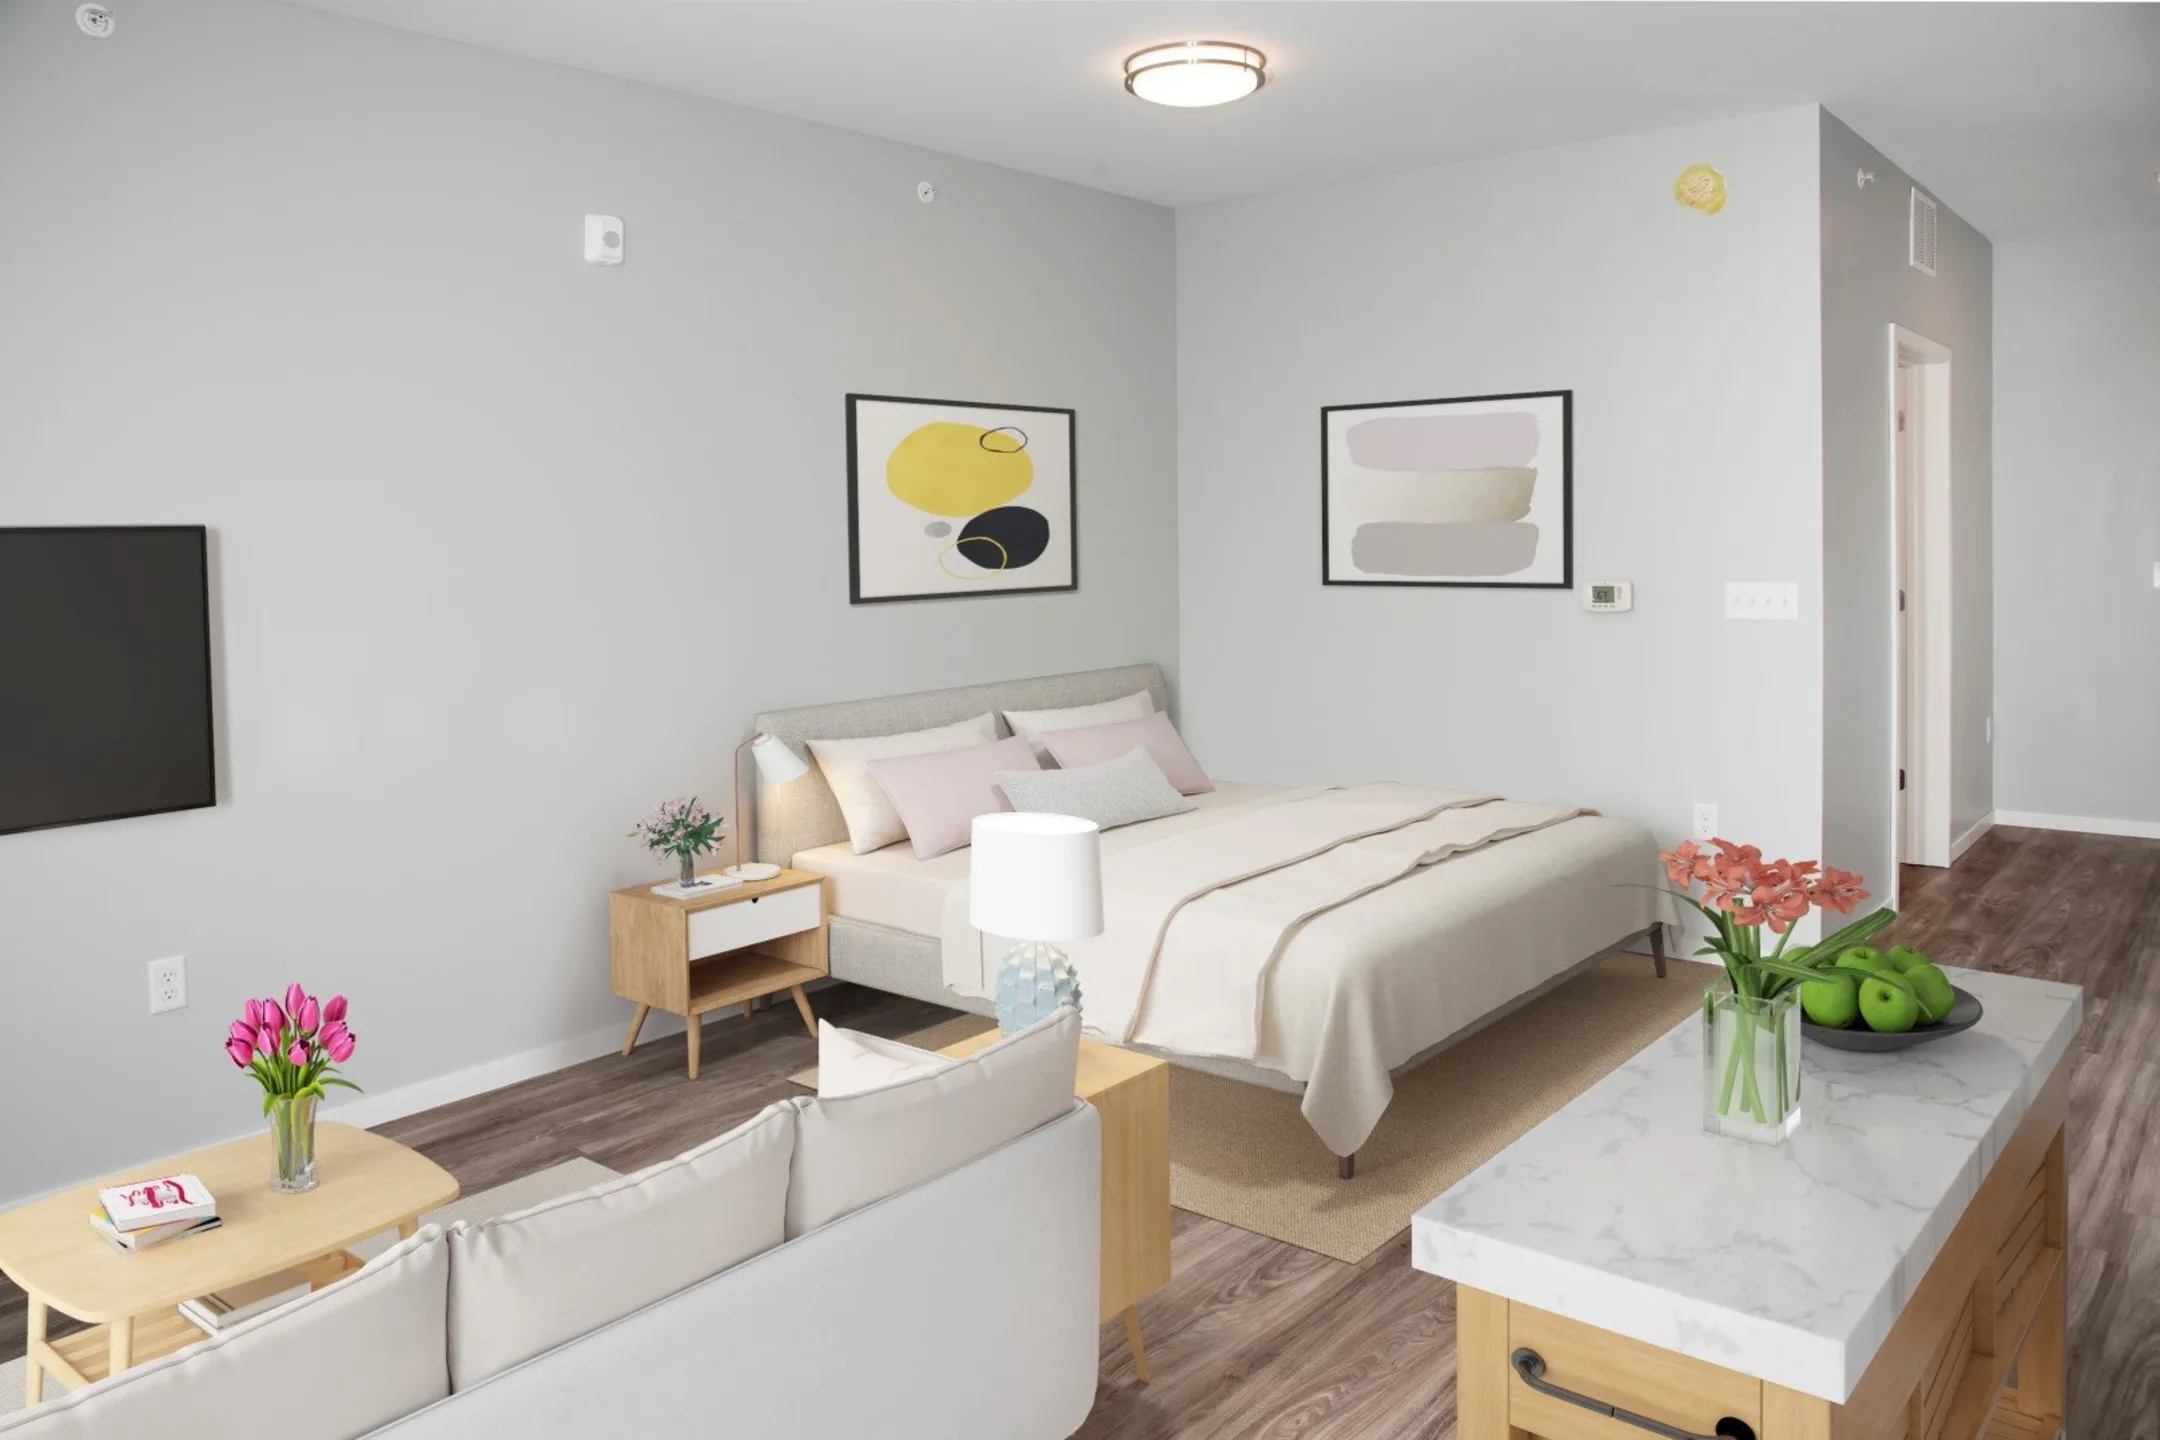 Bedroom - Nova SP - Saint Paul, MN